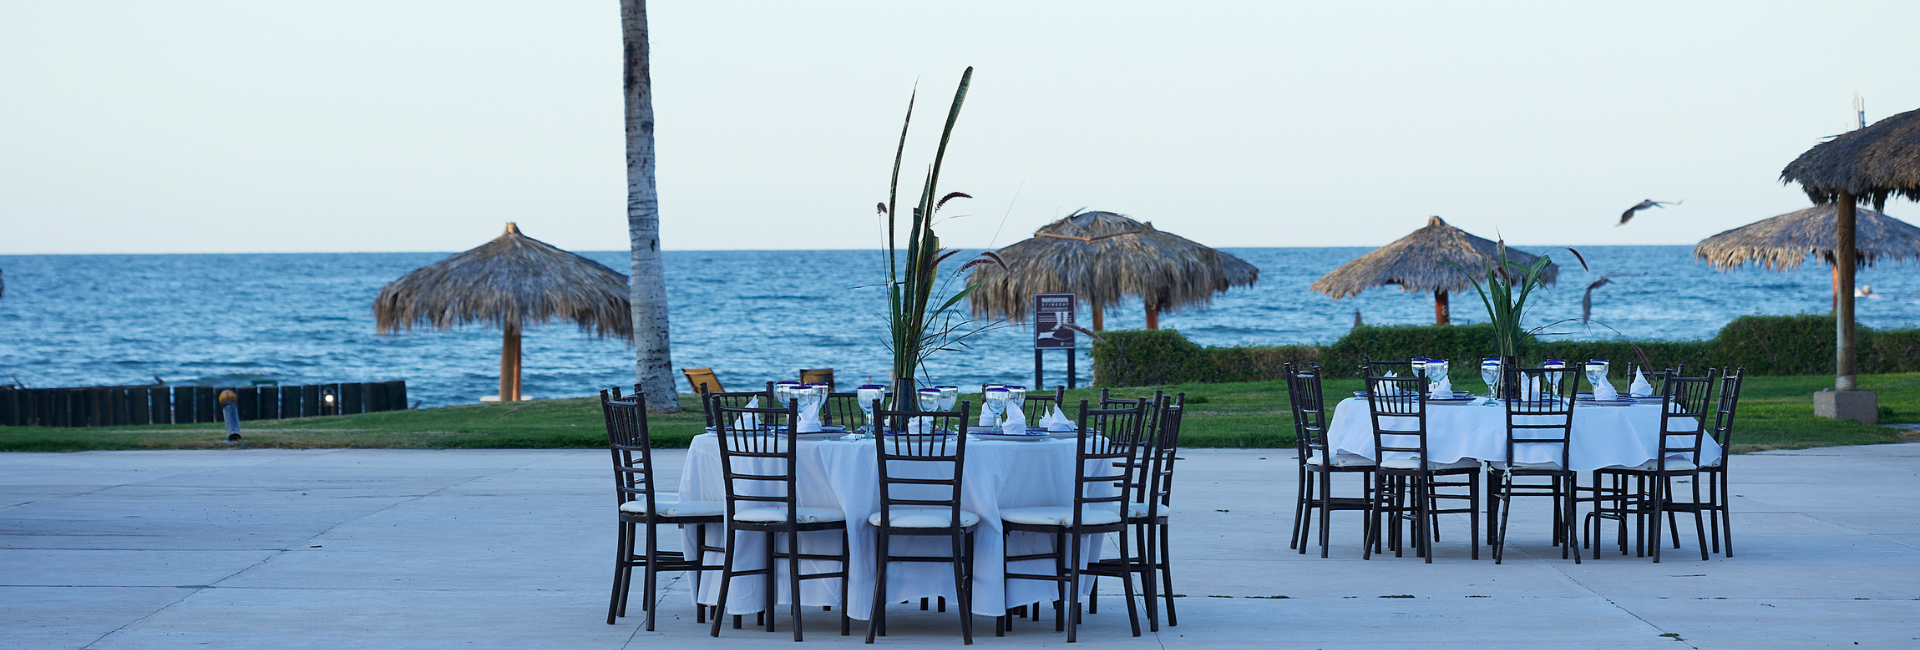 Eventos ideales Hotel Loreto Bay Golf Resort & Spa at Baja Loreto, Baja California Sur